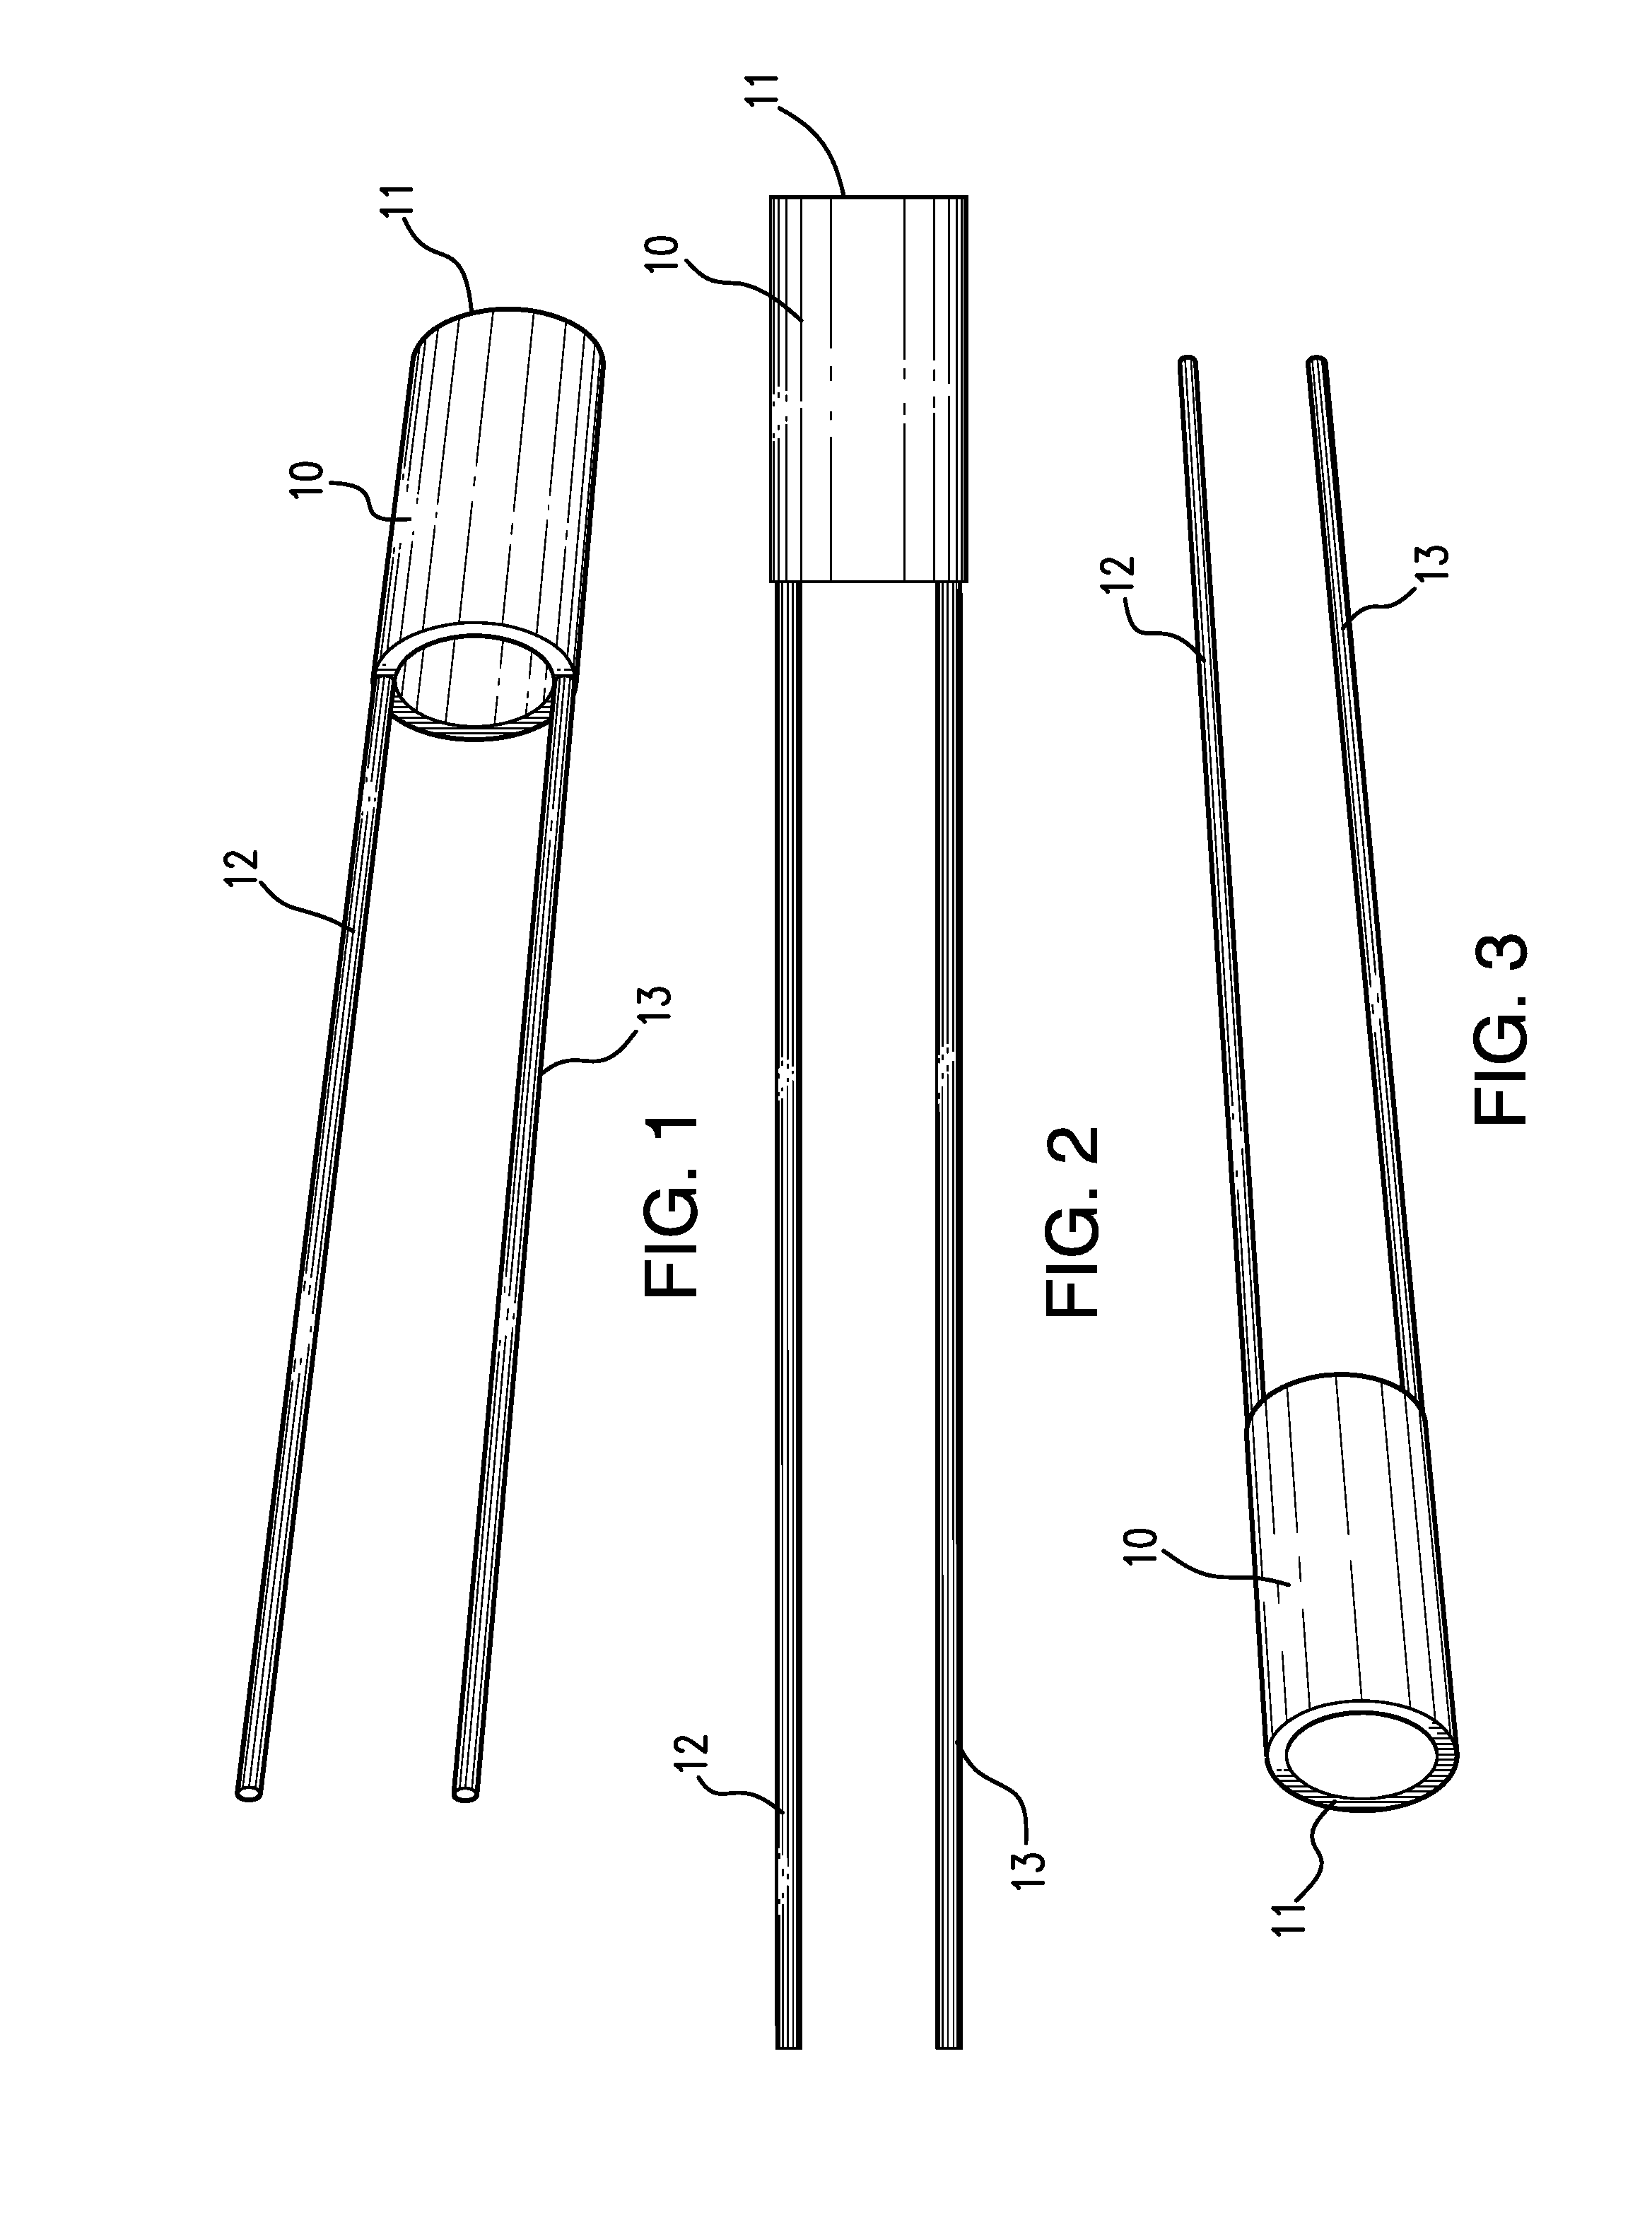 Sleeve piston for actuating a firearm bolt carrier